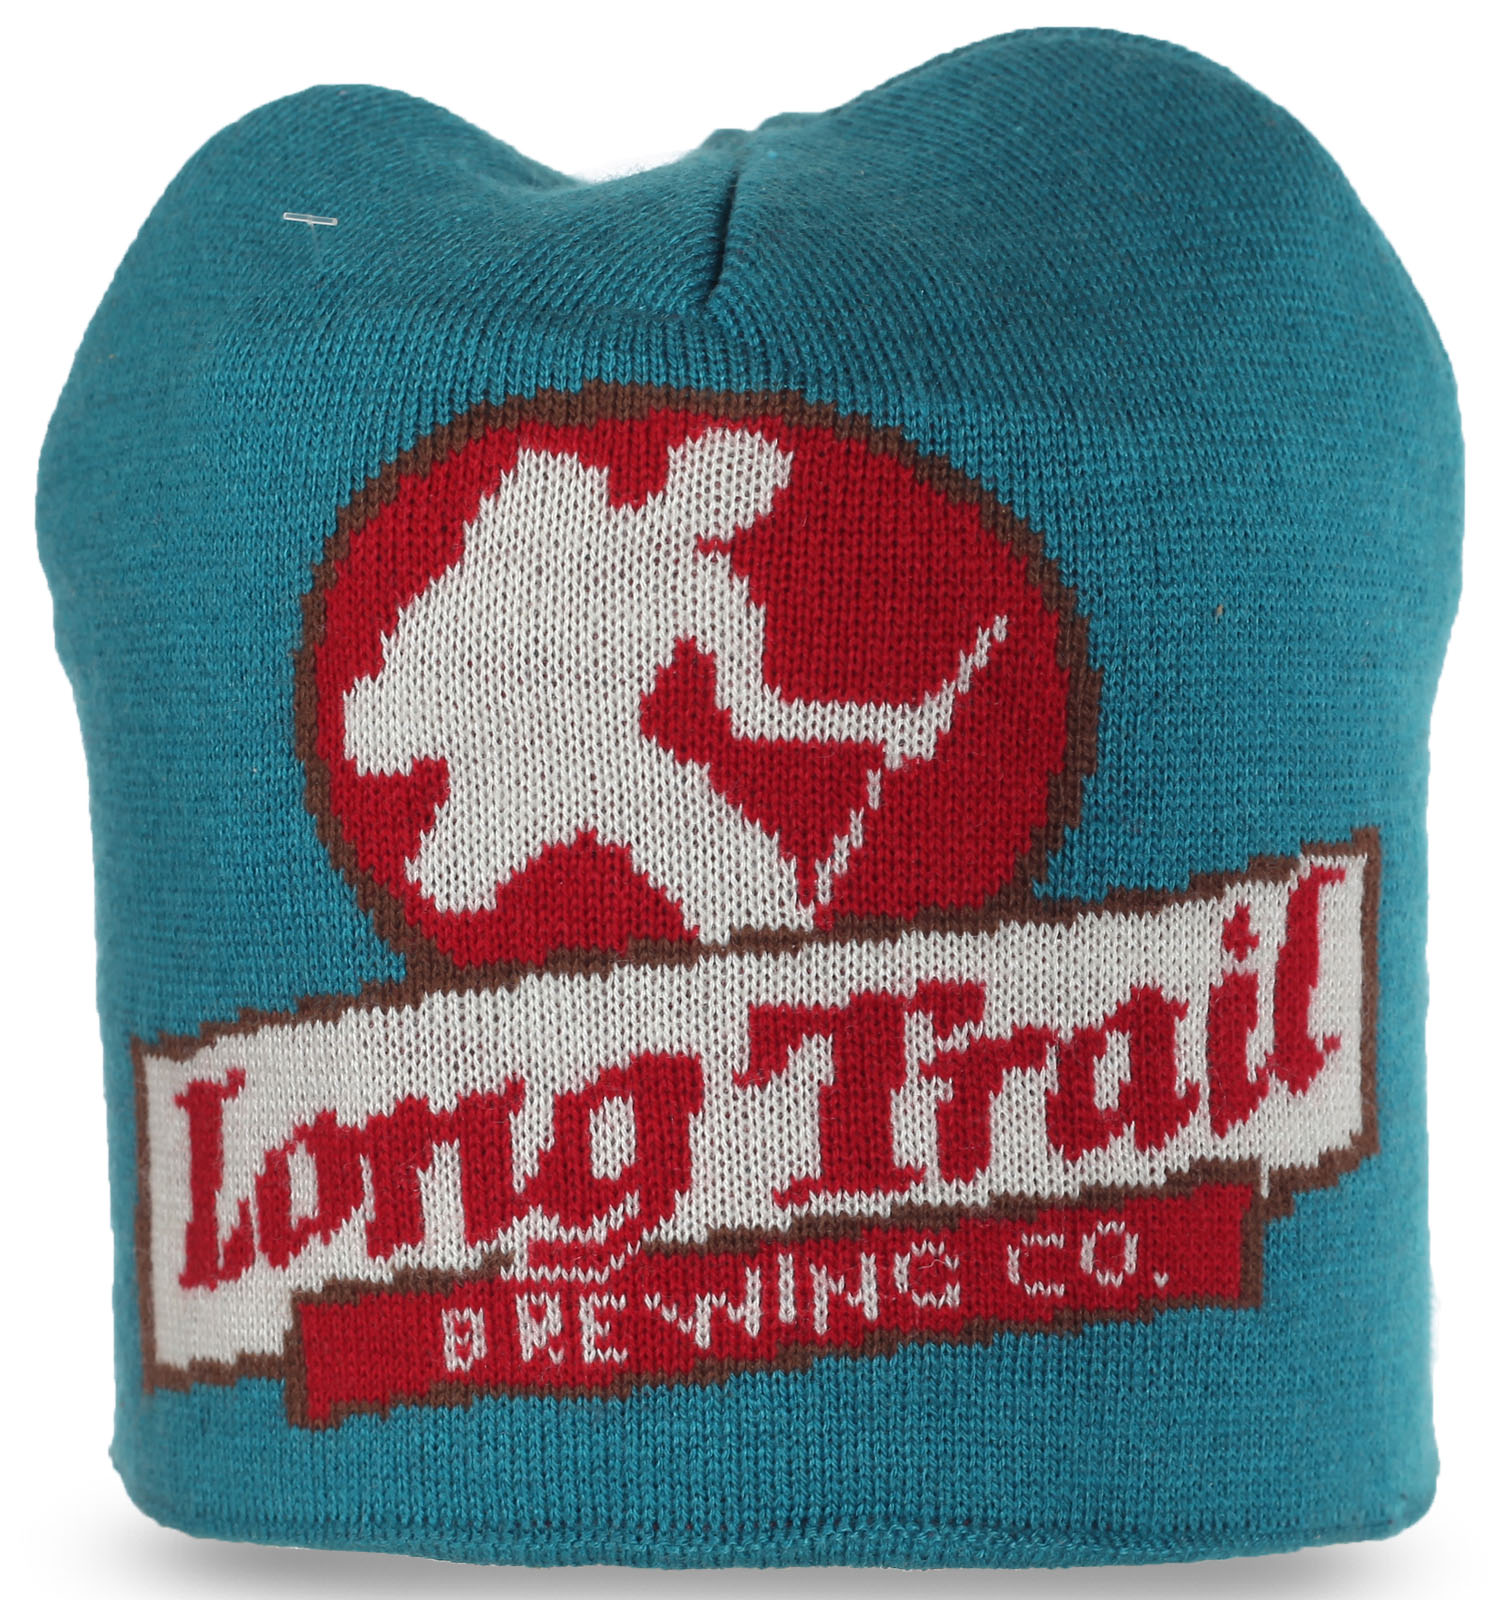 Заказать онлайн мужские шапки Long Trail с доставкой недорого